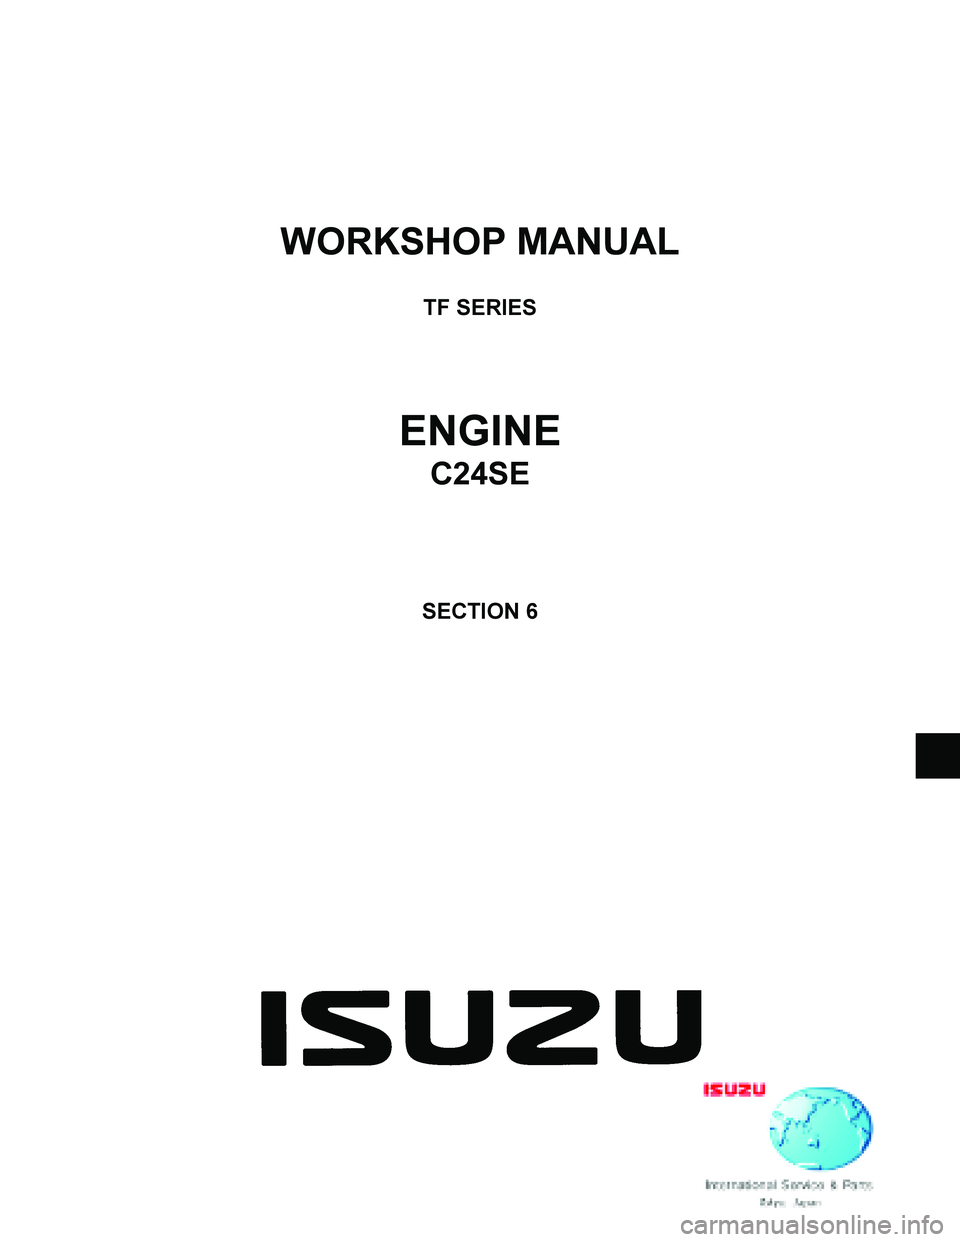 ISUZU TF SERIES 2004  Workshop Manual  
WORKSHOP MANUAL 
 
TF SERIES 
 
 
 
 
ENGINE 
C24SE 
 
 
 
 
 
SECTION 6 
 
 
  